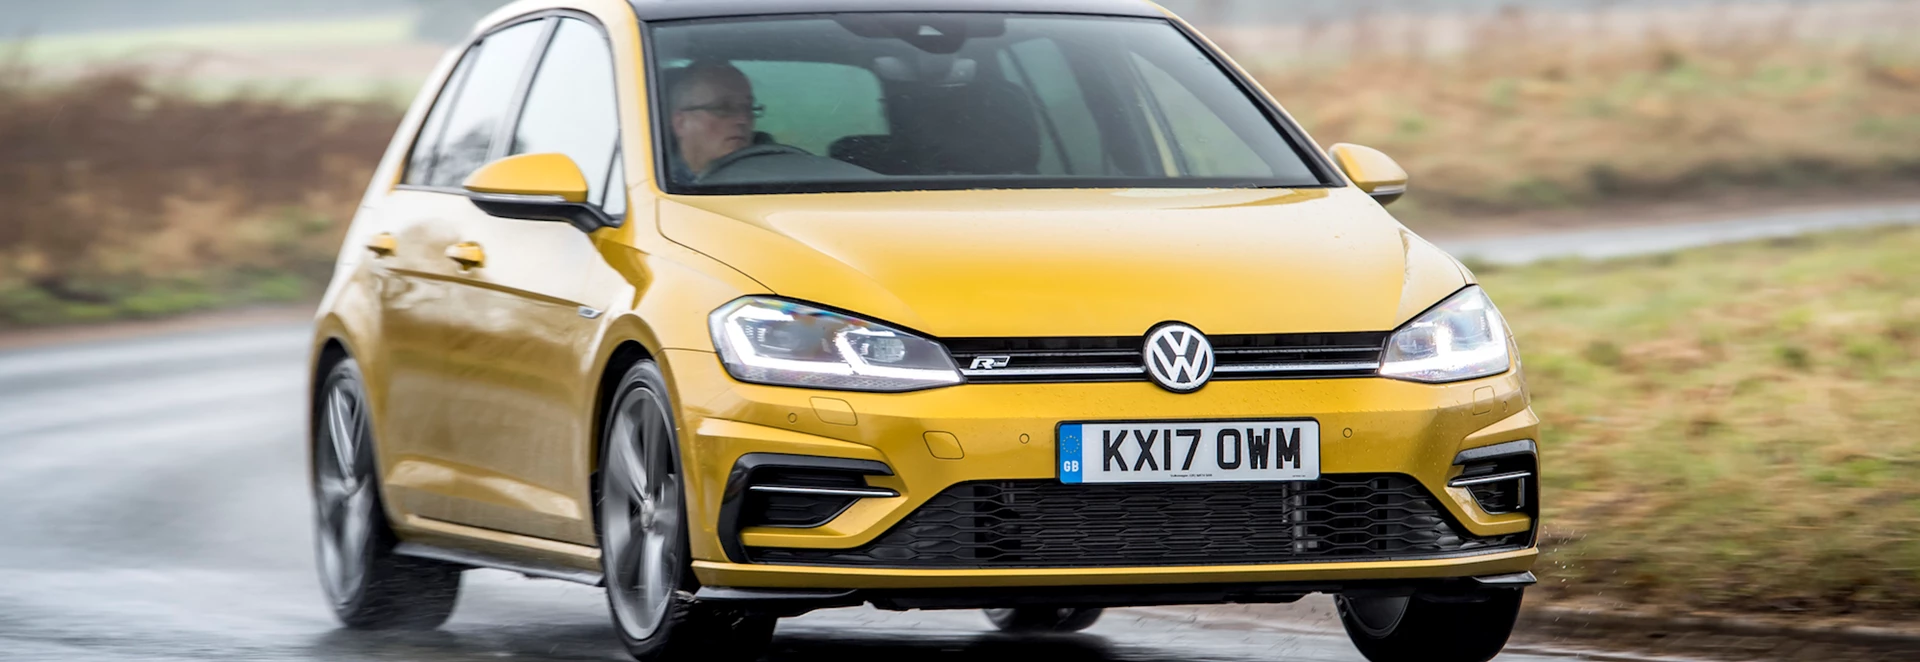 Volkswagen releases petrol engine with diesel-like economy